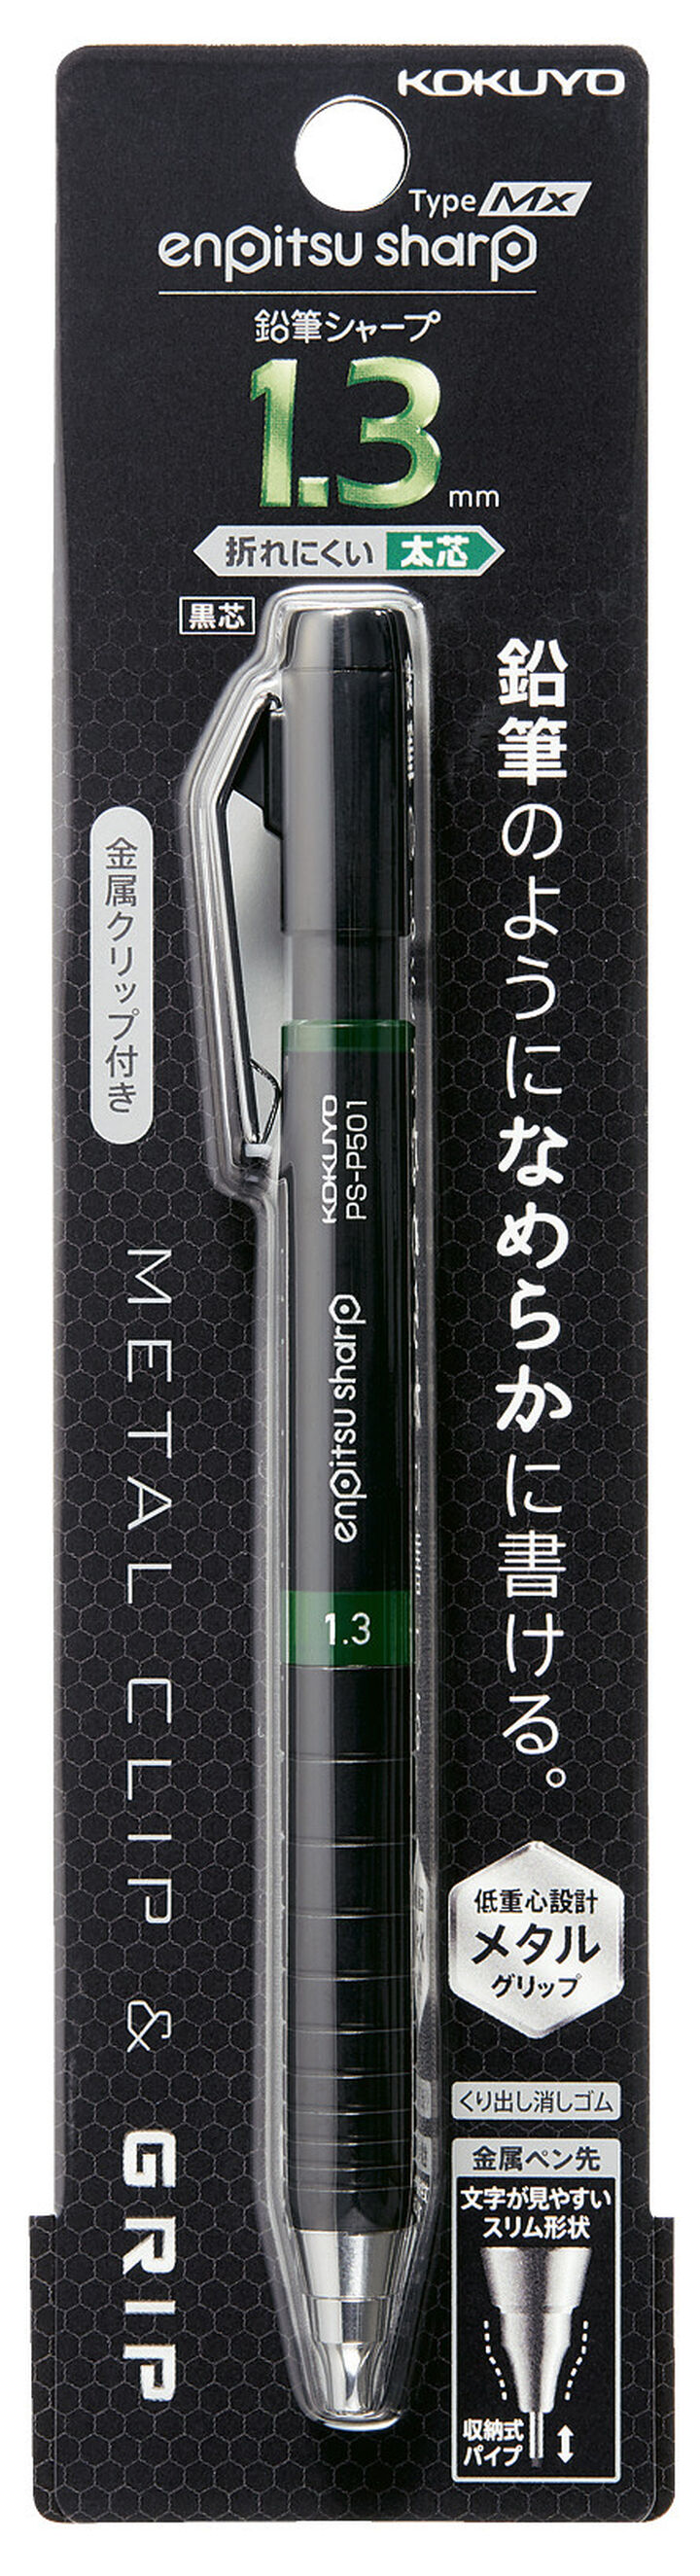 Enpitsu sharp mechanical pencil TypeM 1.3mm Metal Grip,Green, medium image number 1